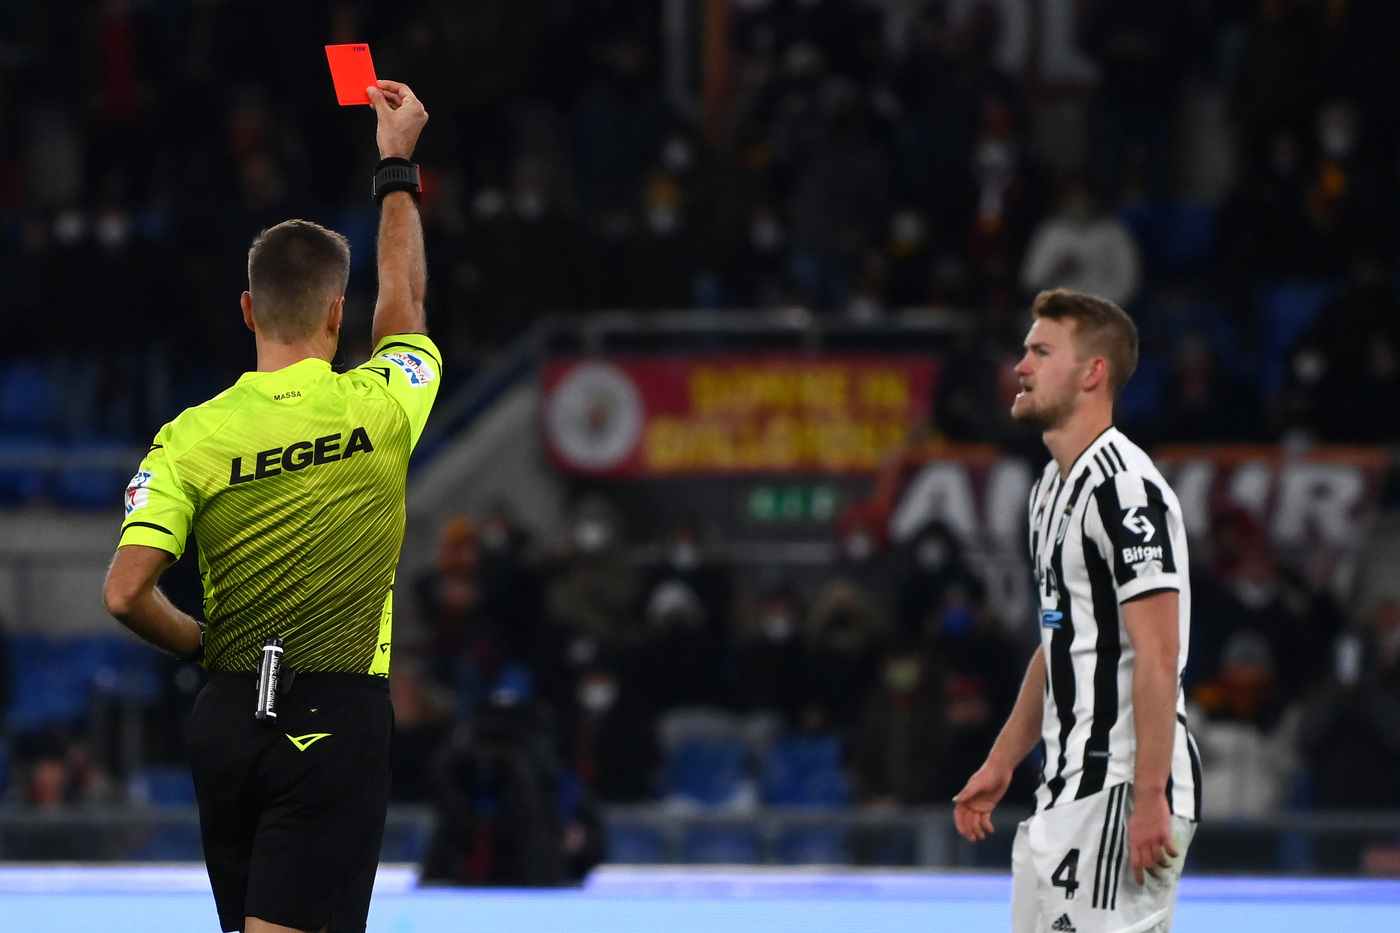 L'annuncio che spaventa la Juventus: "De Ligt verrà ceduto"